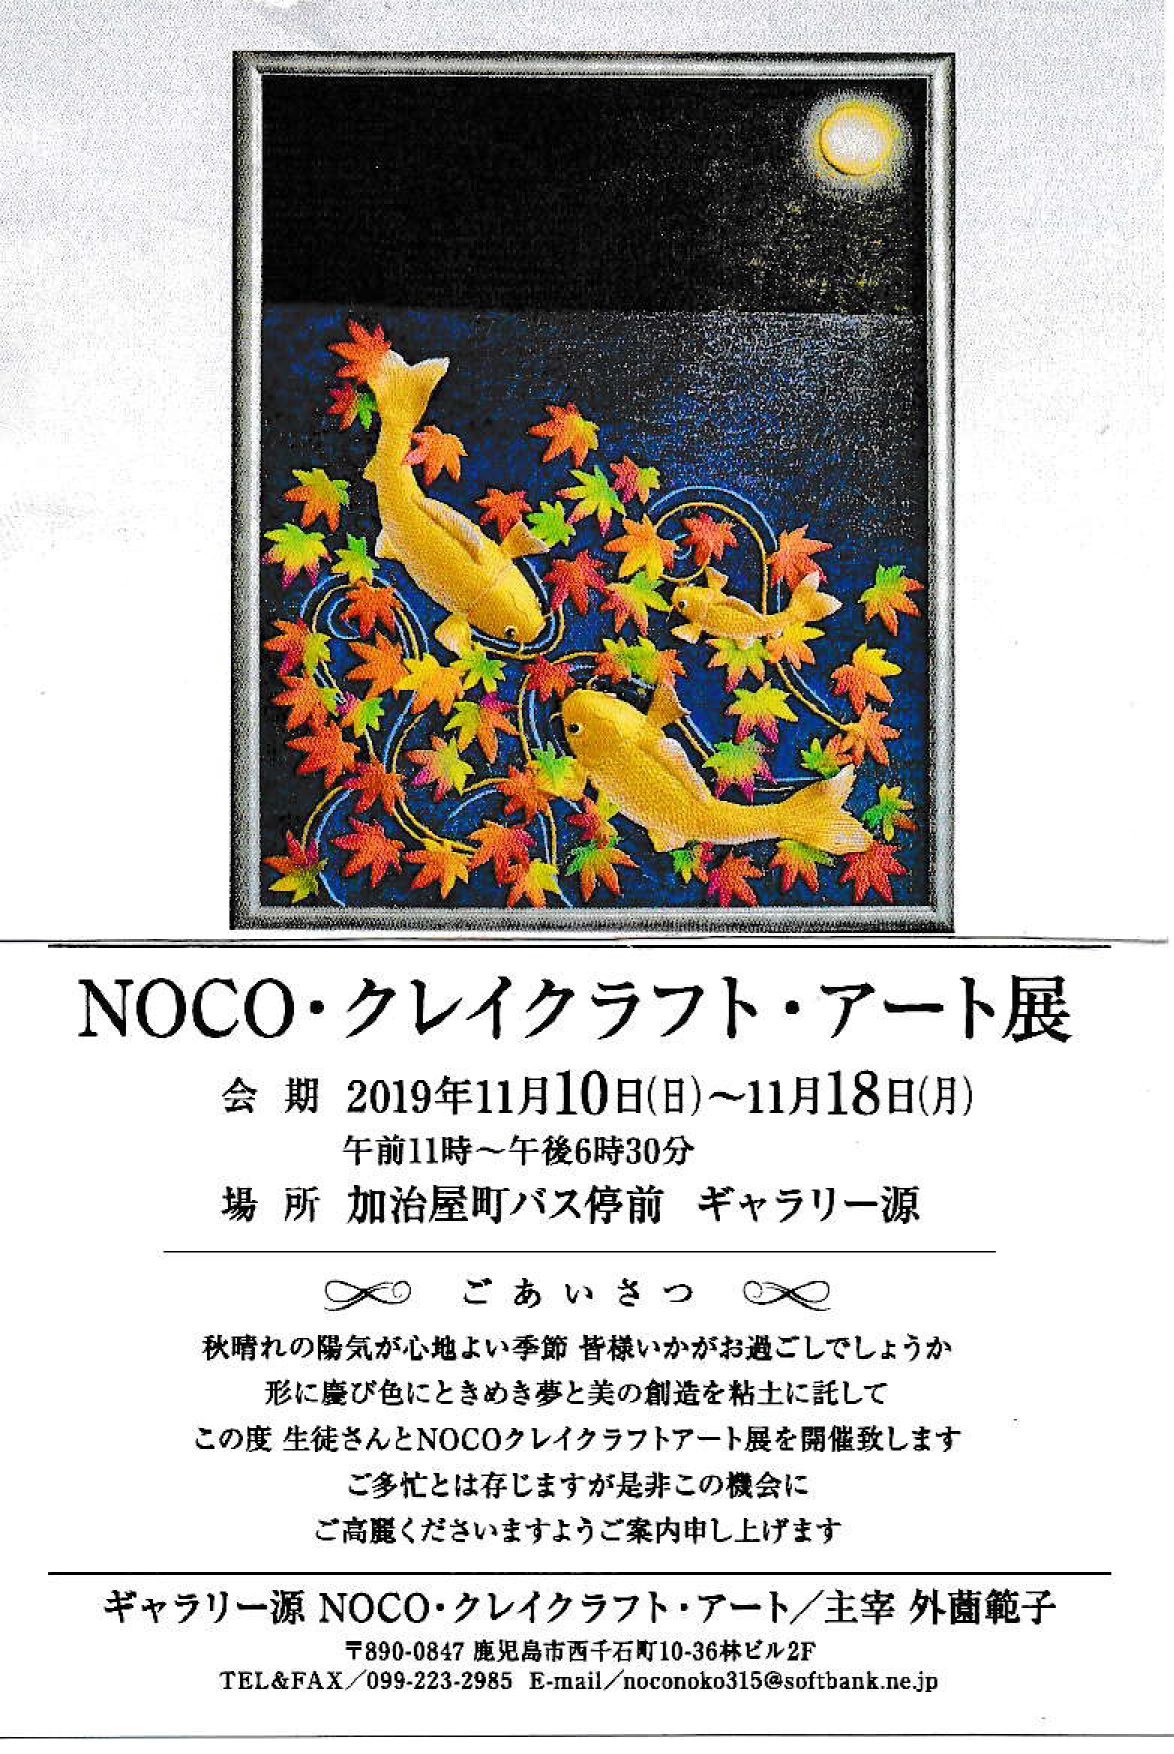 NOCO・クレイクラフト・アート展